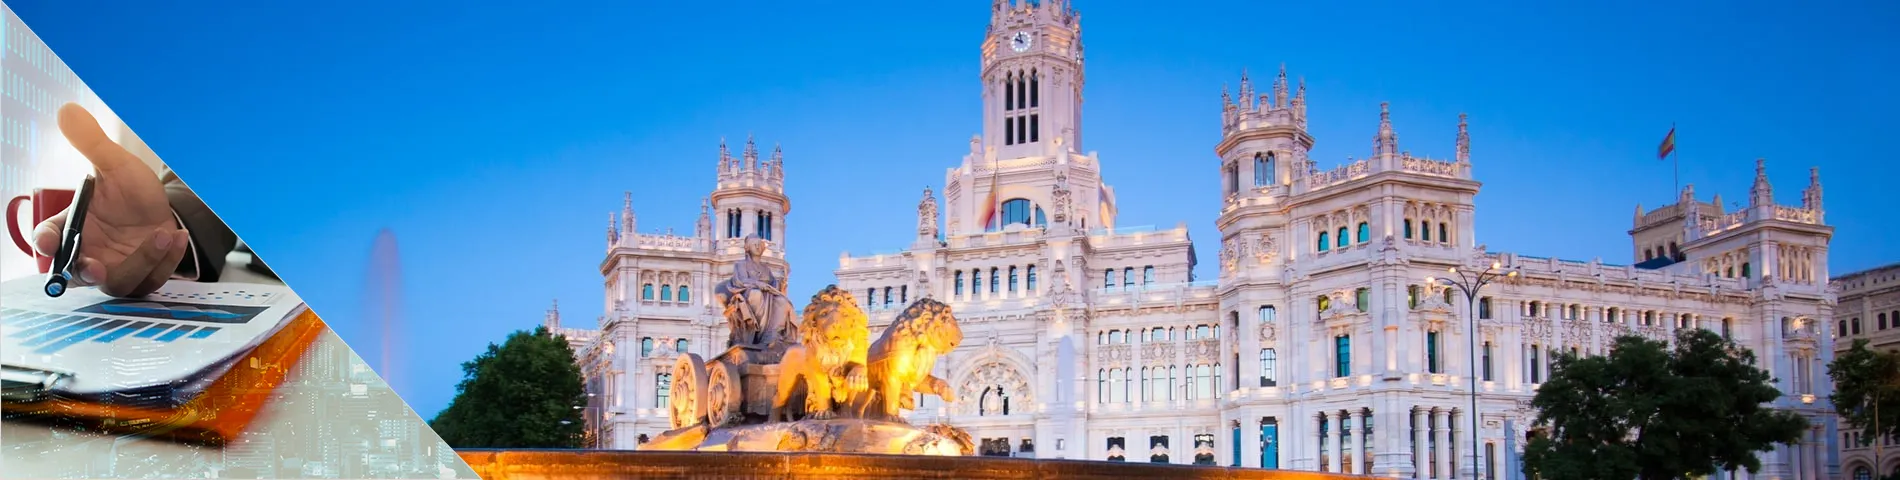 Madrid - Bankacılık ve Finans